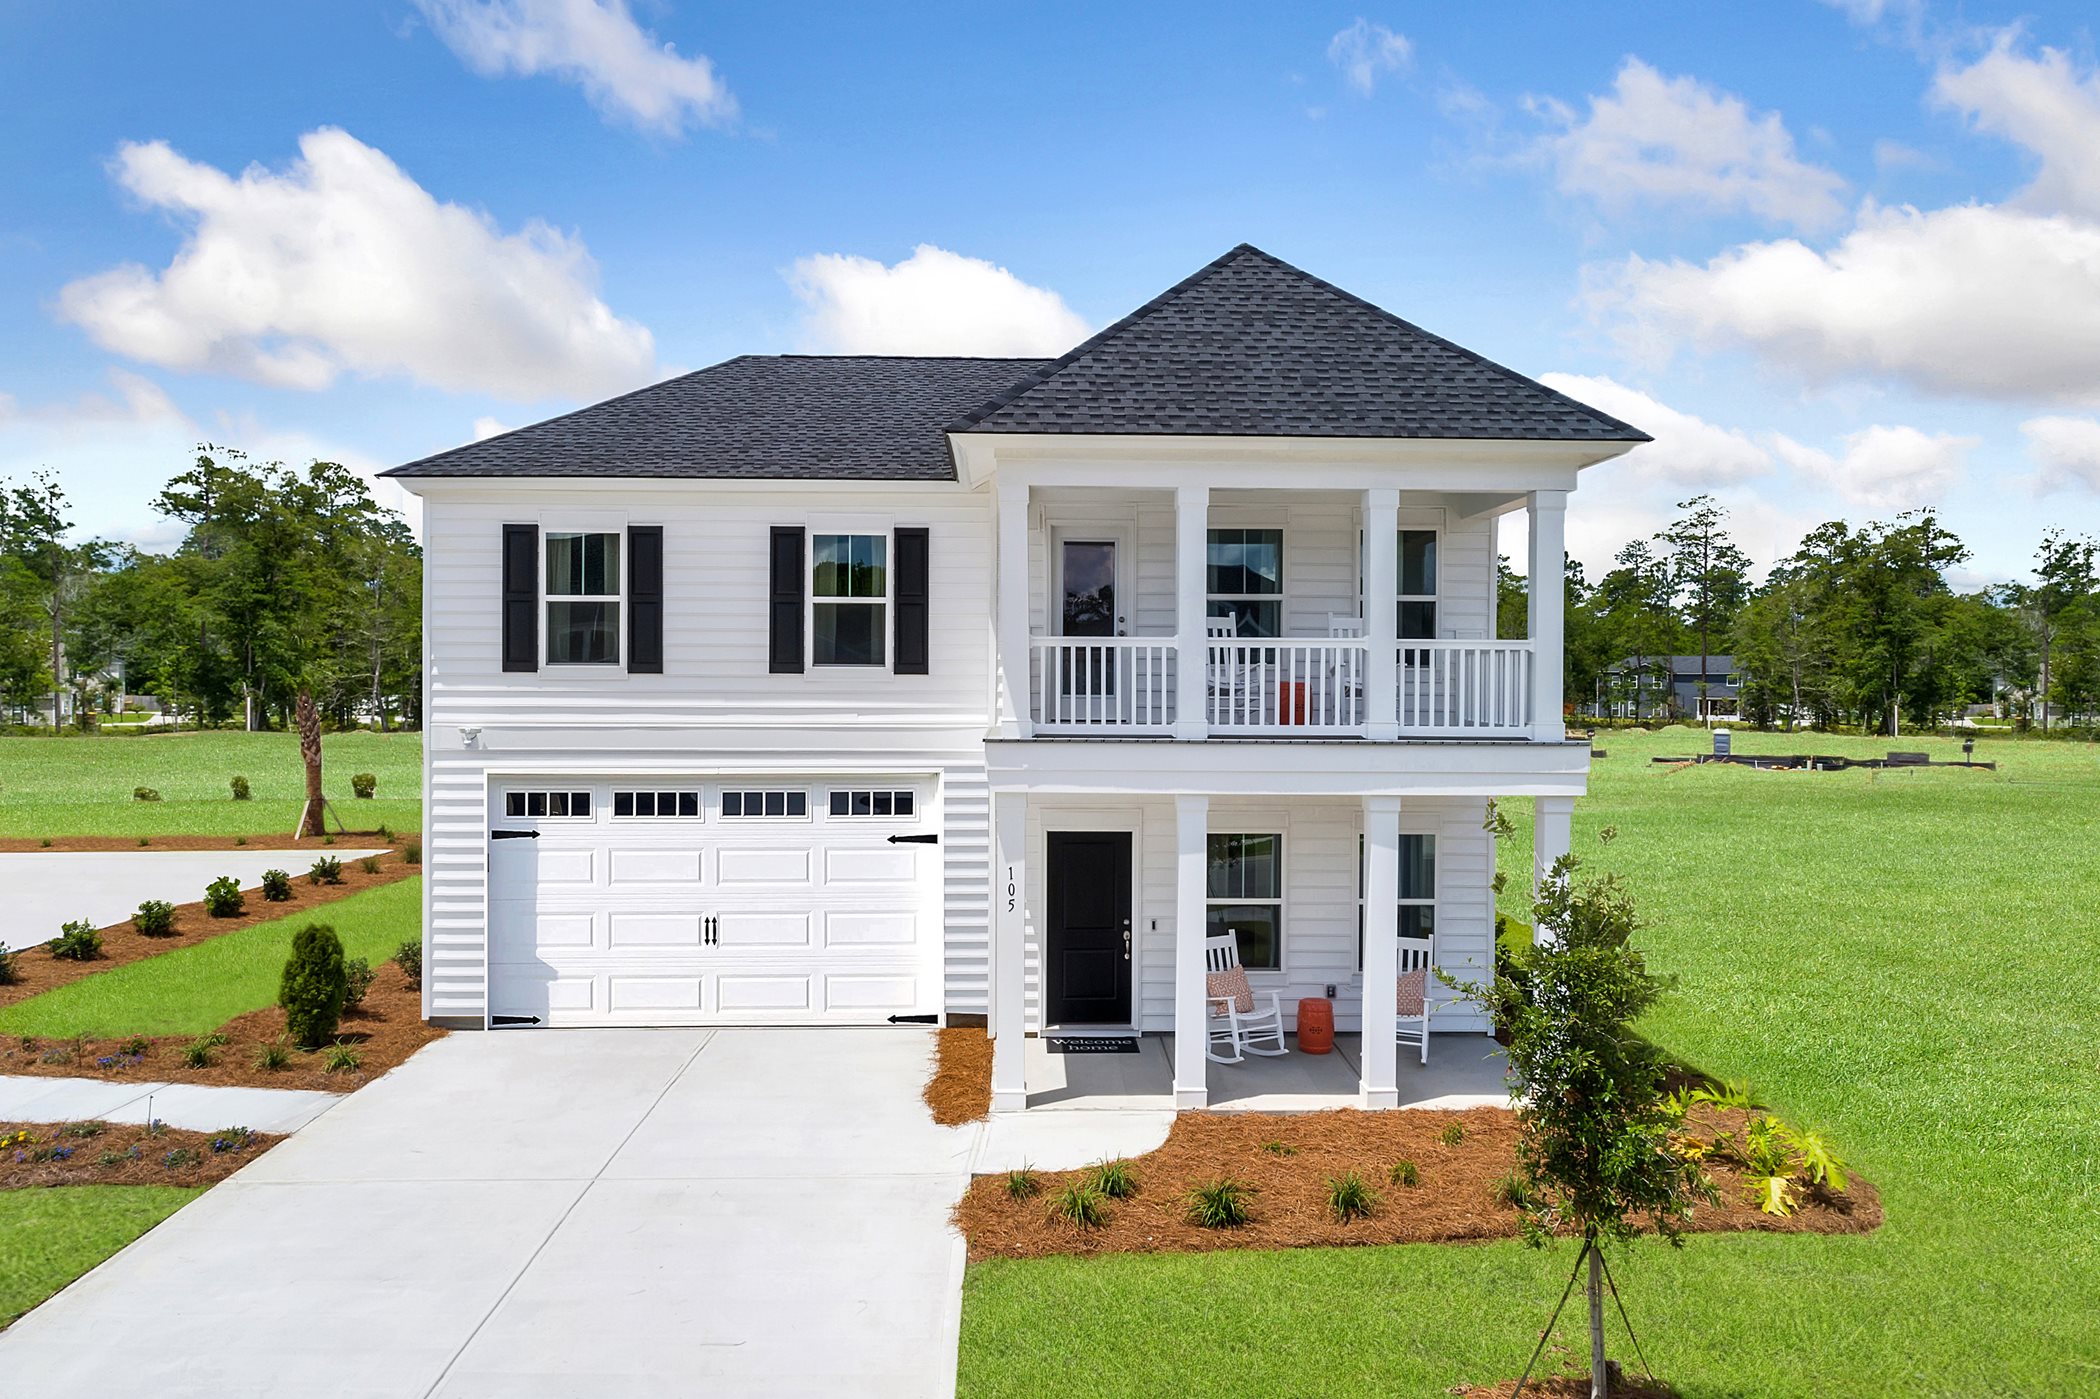 New Homes for sale in Hilton Head & Savannah